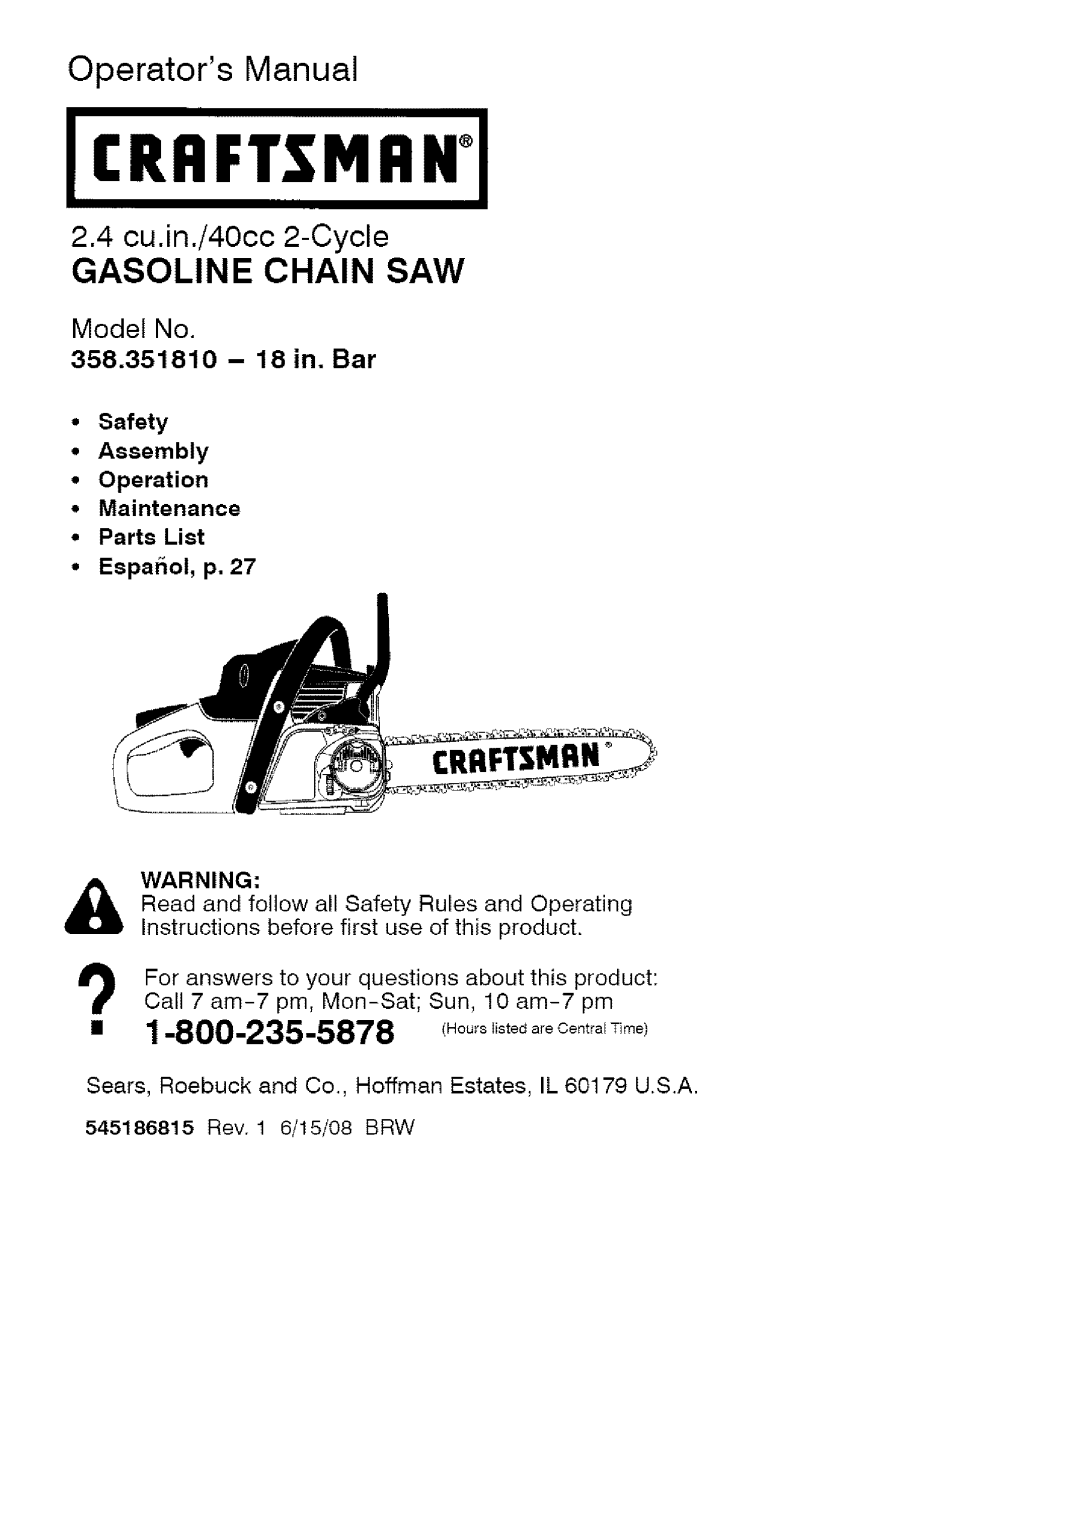 Craftsman manual Model No, 358.351810 - 18 in. Bar, Operators Manual 2.4cu.in./40cc 2-Cycle, Gasoline Chain Saw 